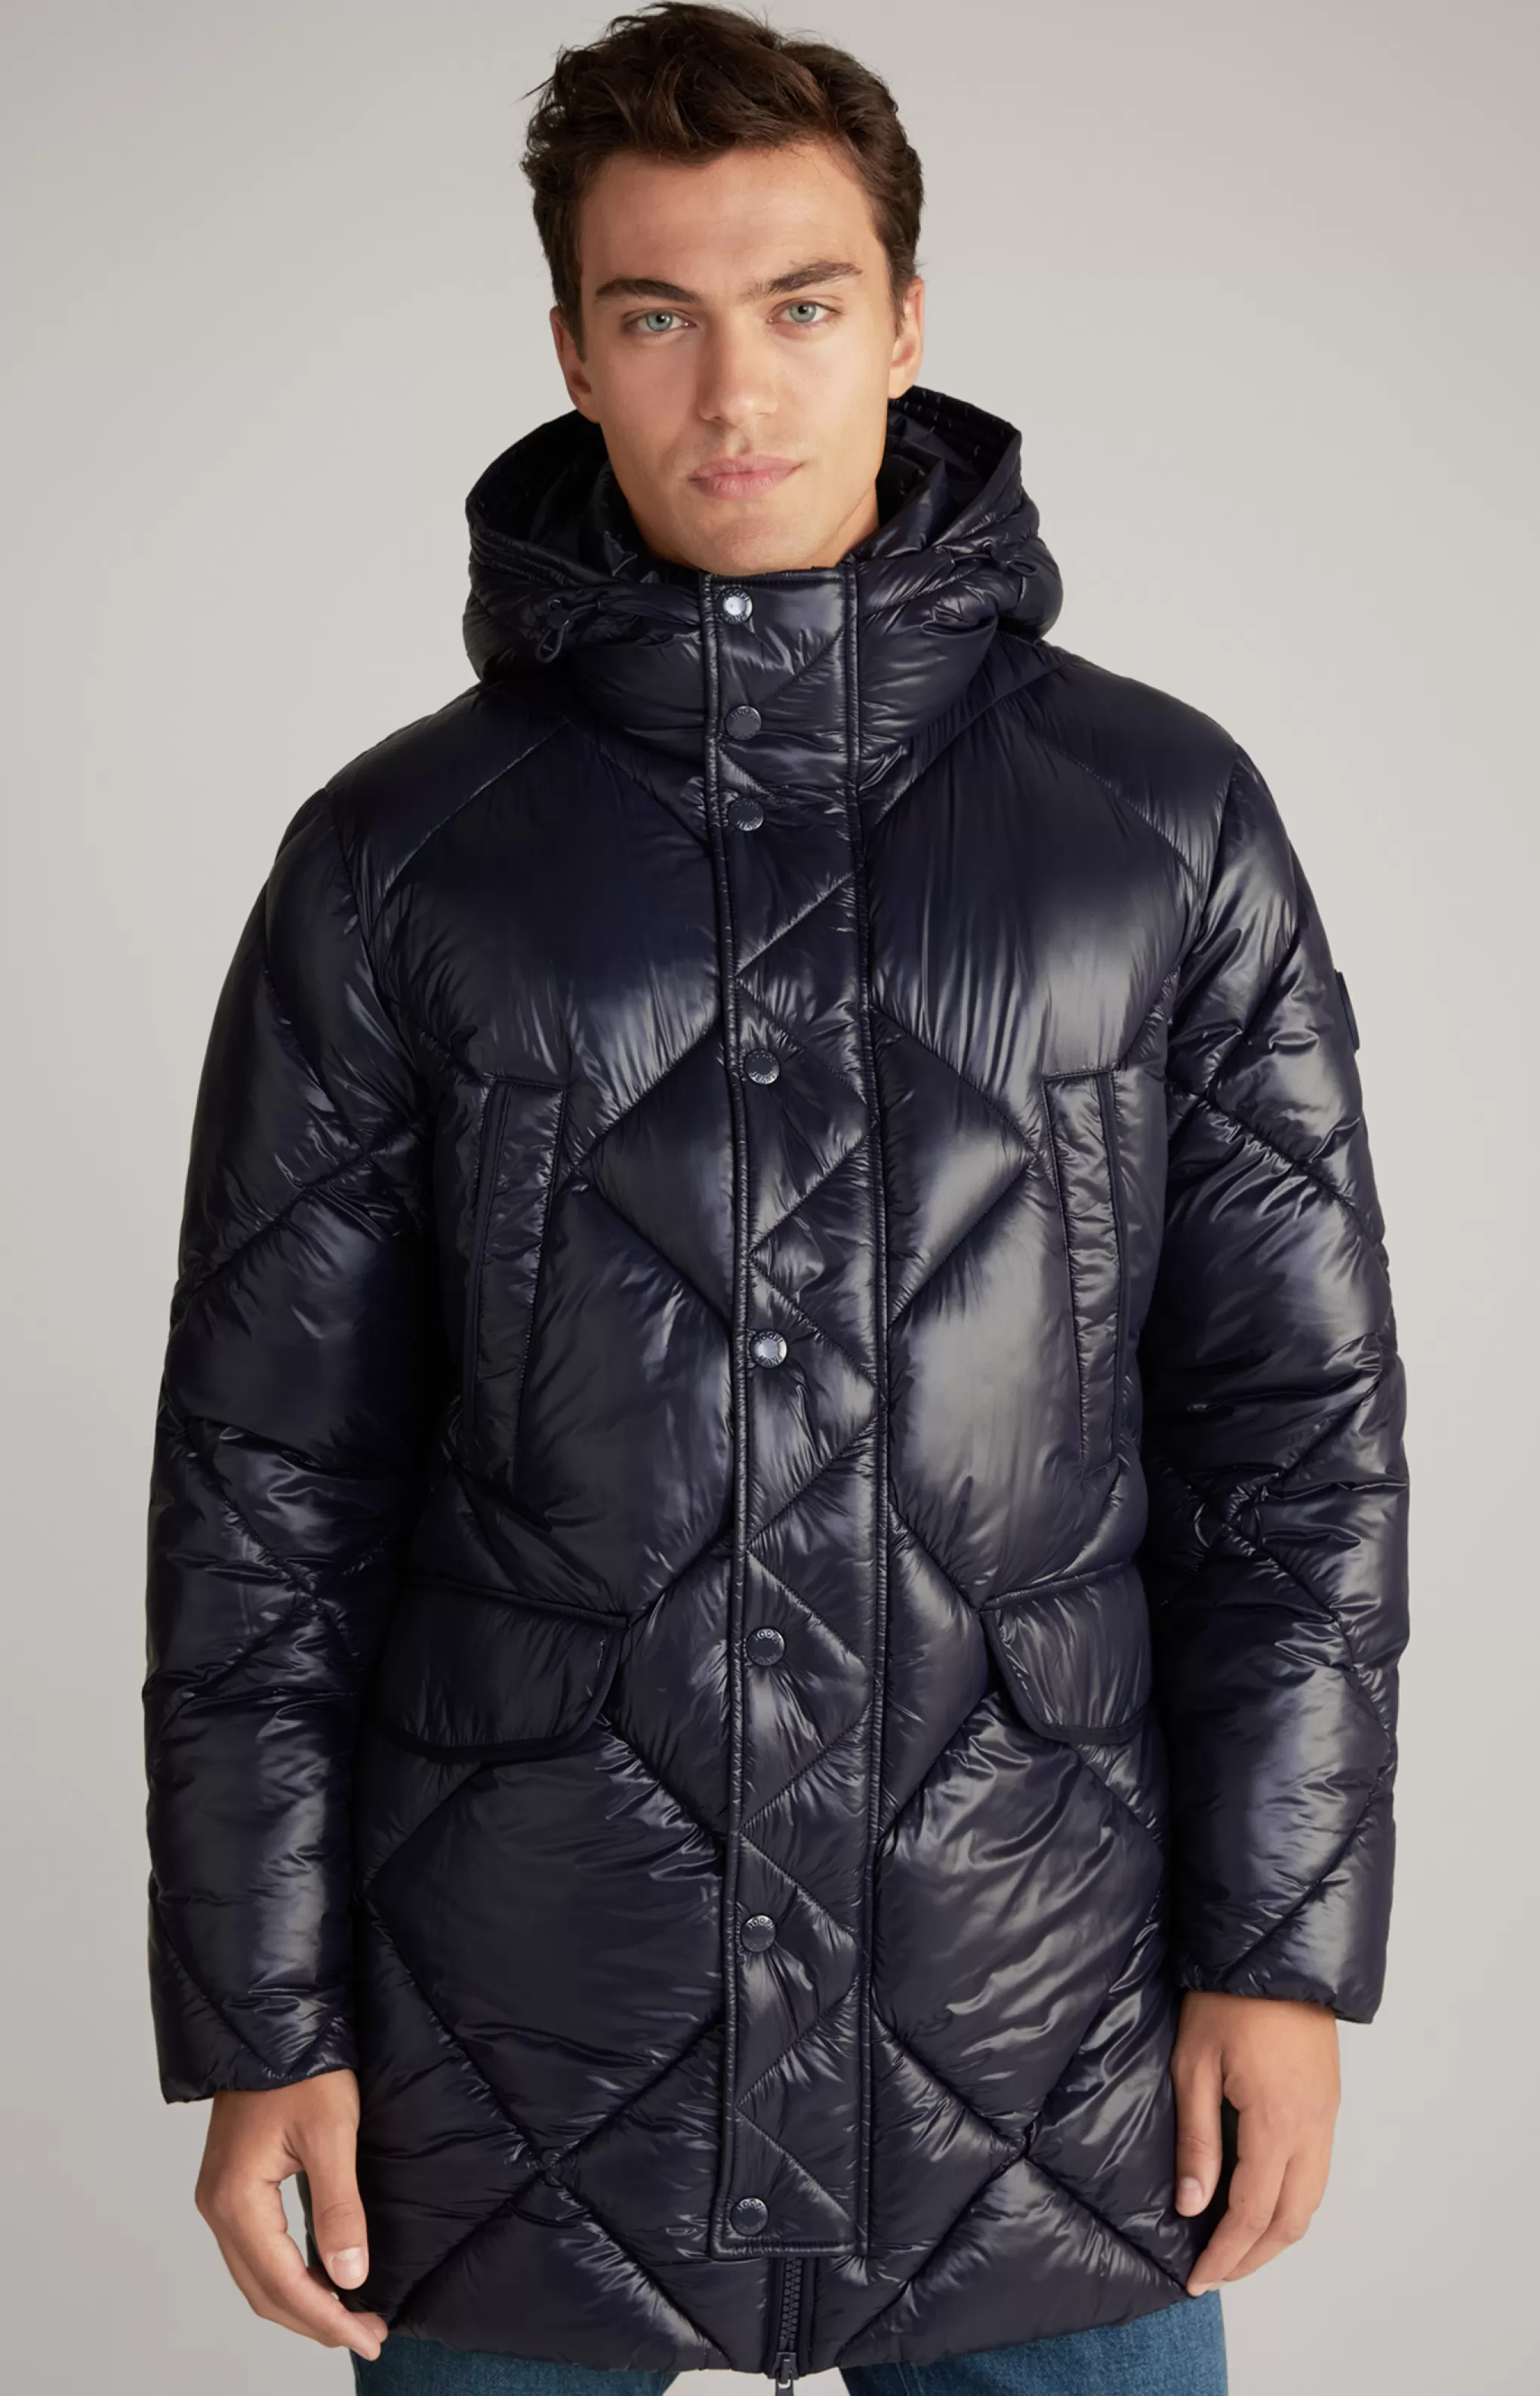 Coats | Jackets | Clothing*JOOP Coats | Jackets | Clothing Morito Quilted Coat in Navy